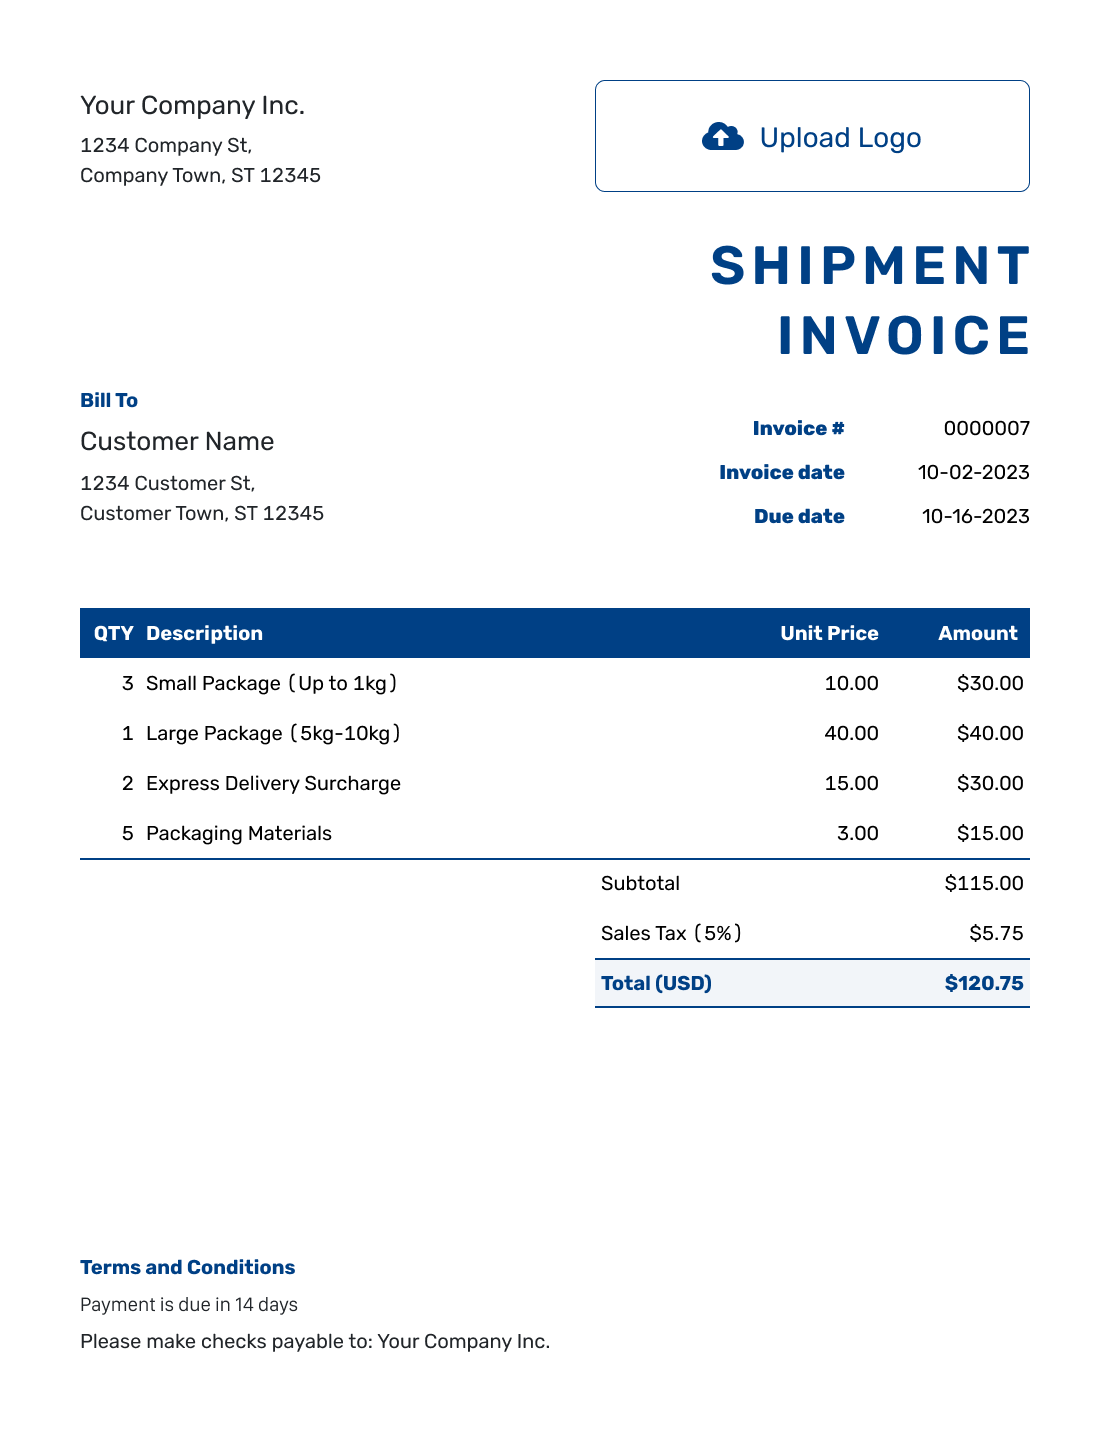 Sample Shipment Invoice Template